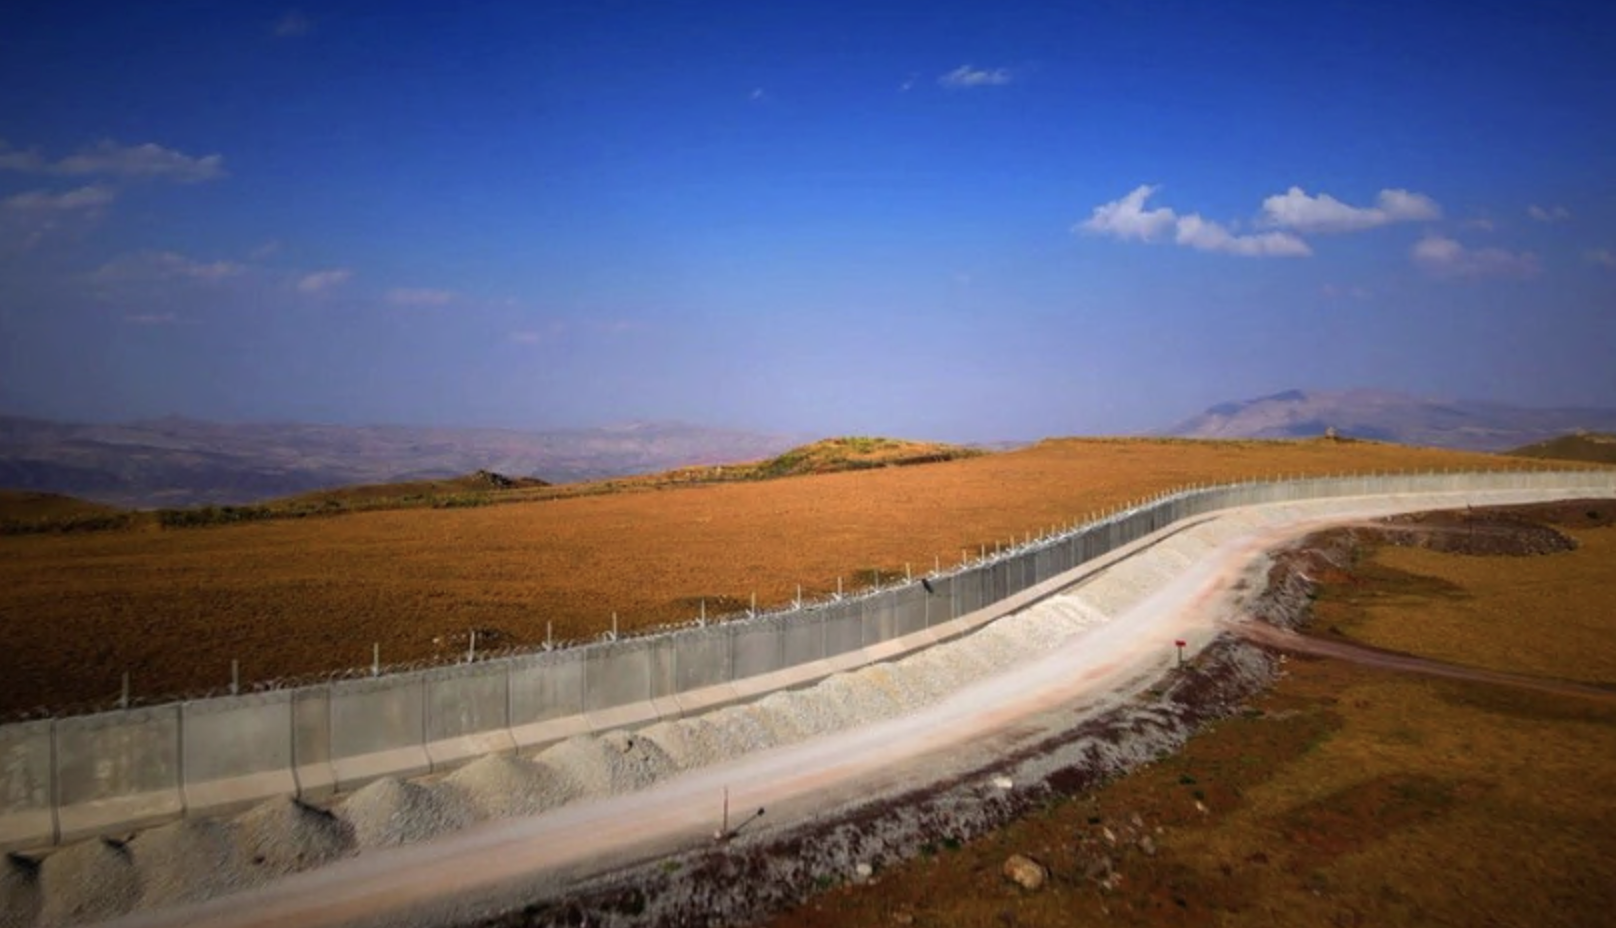 Concrete border wall runs along landscape with blue sky above